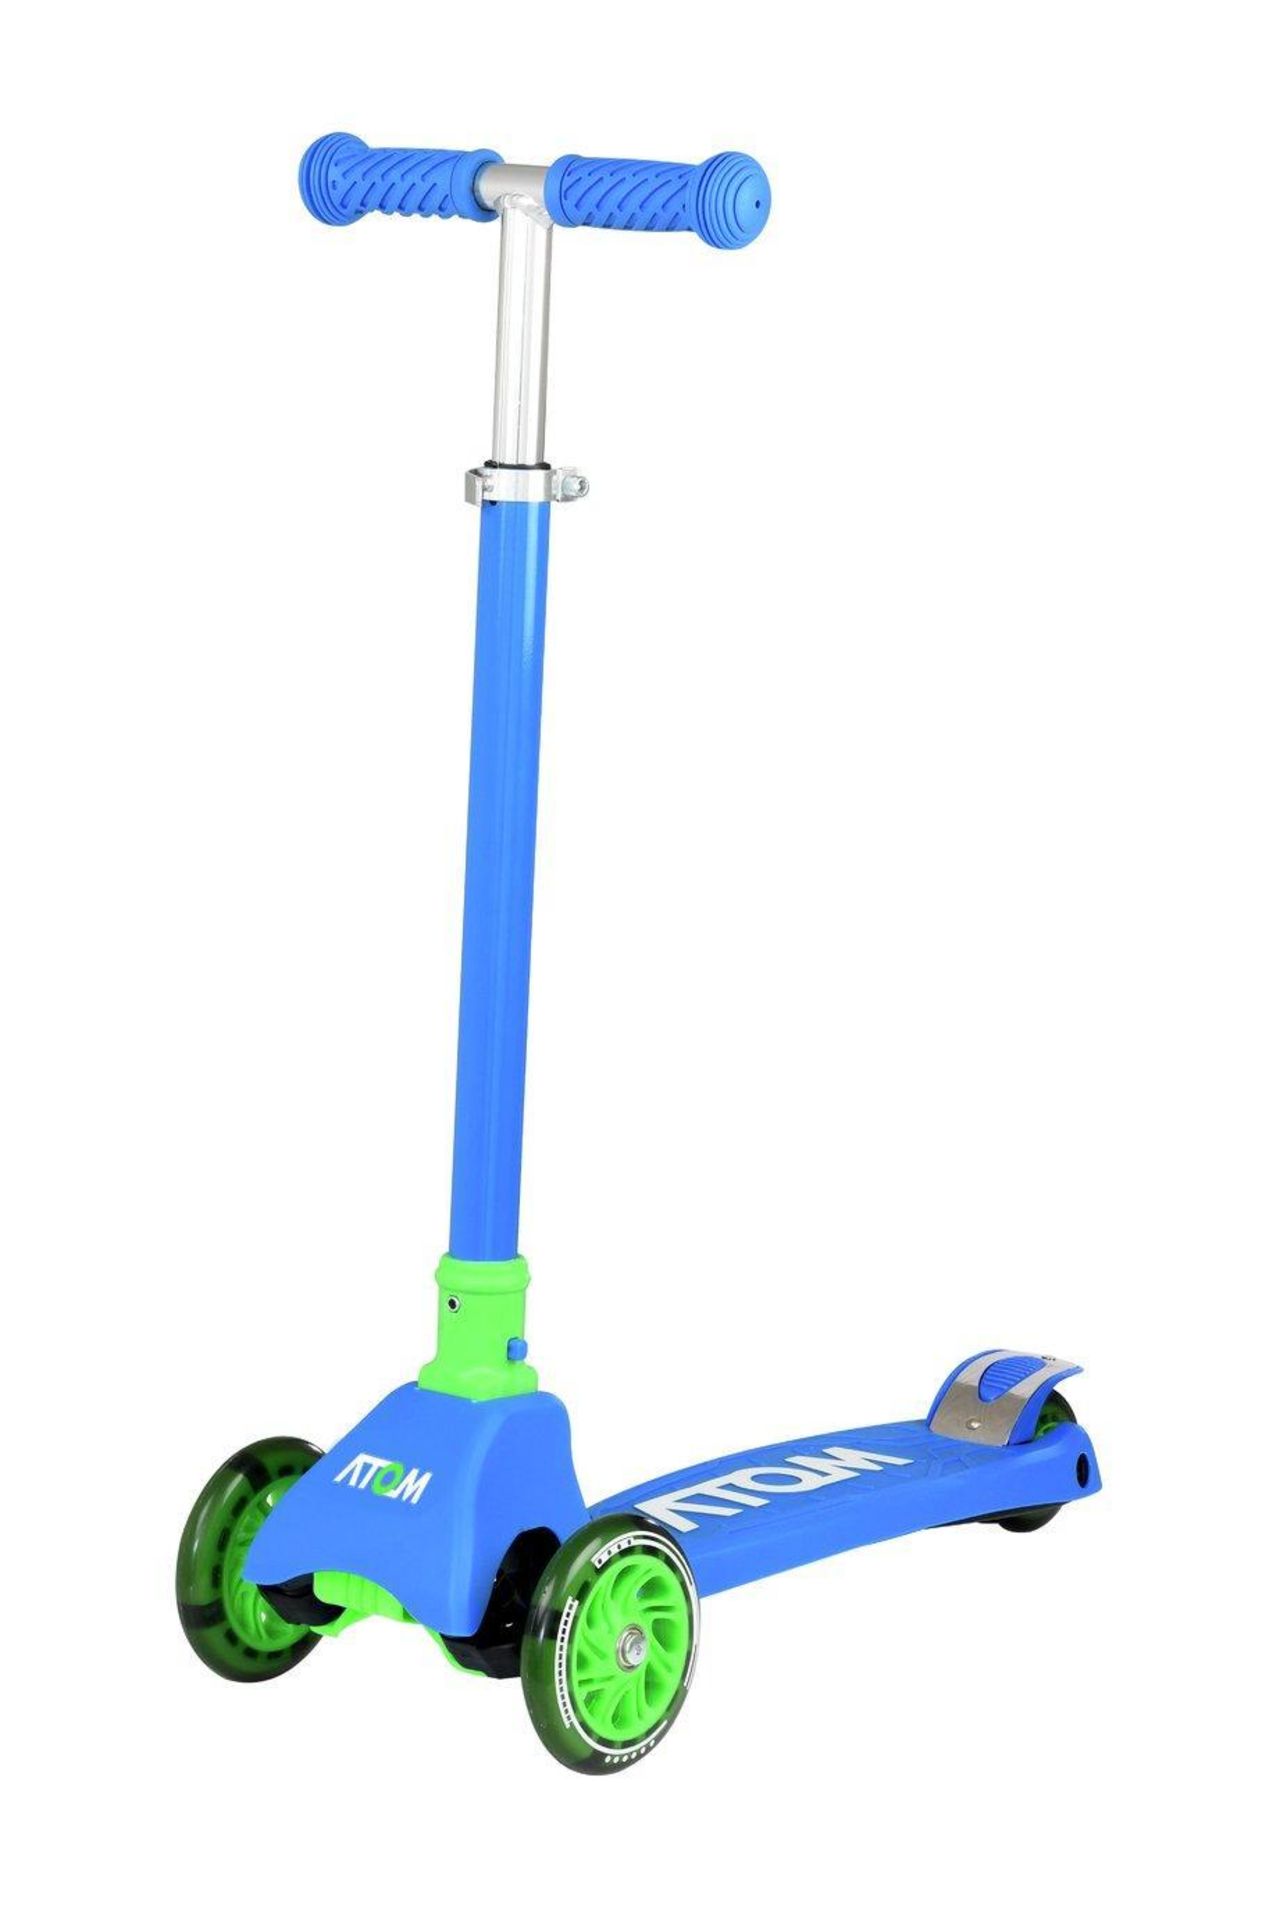 Atom Navigator Scooter - Blue, £34.99 RRP